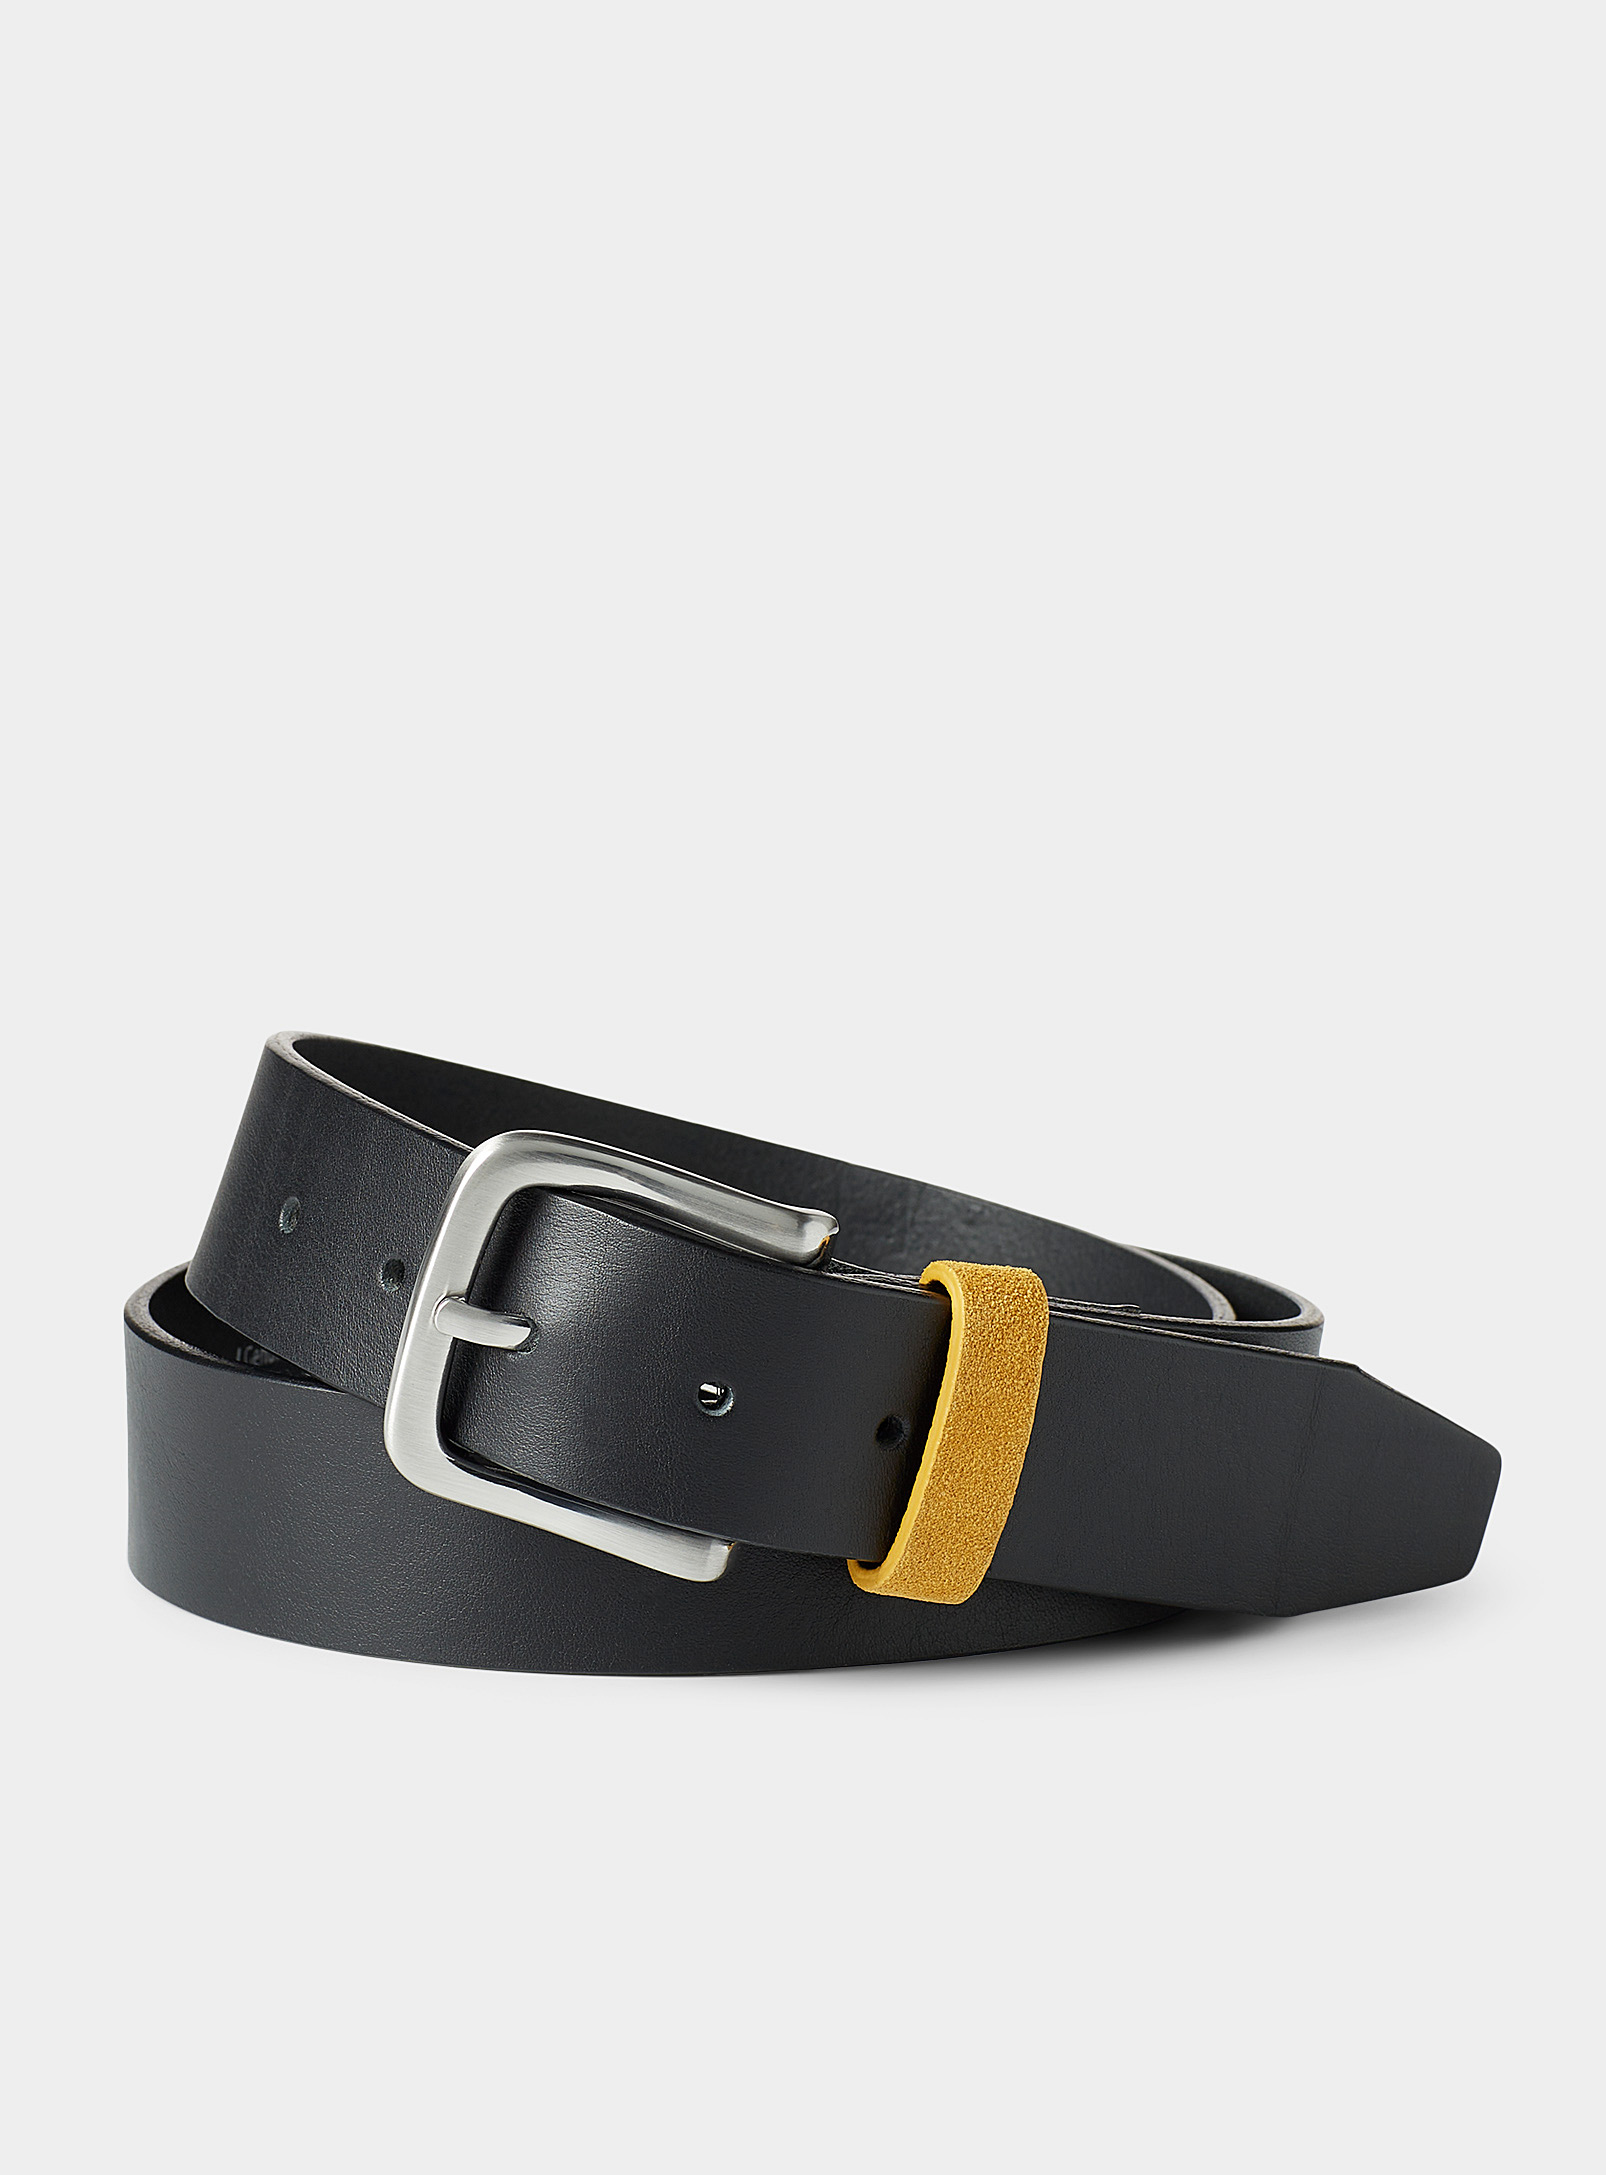 Le 31 Suede Loop Italian Leather Belt In Golden Yellow